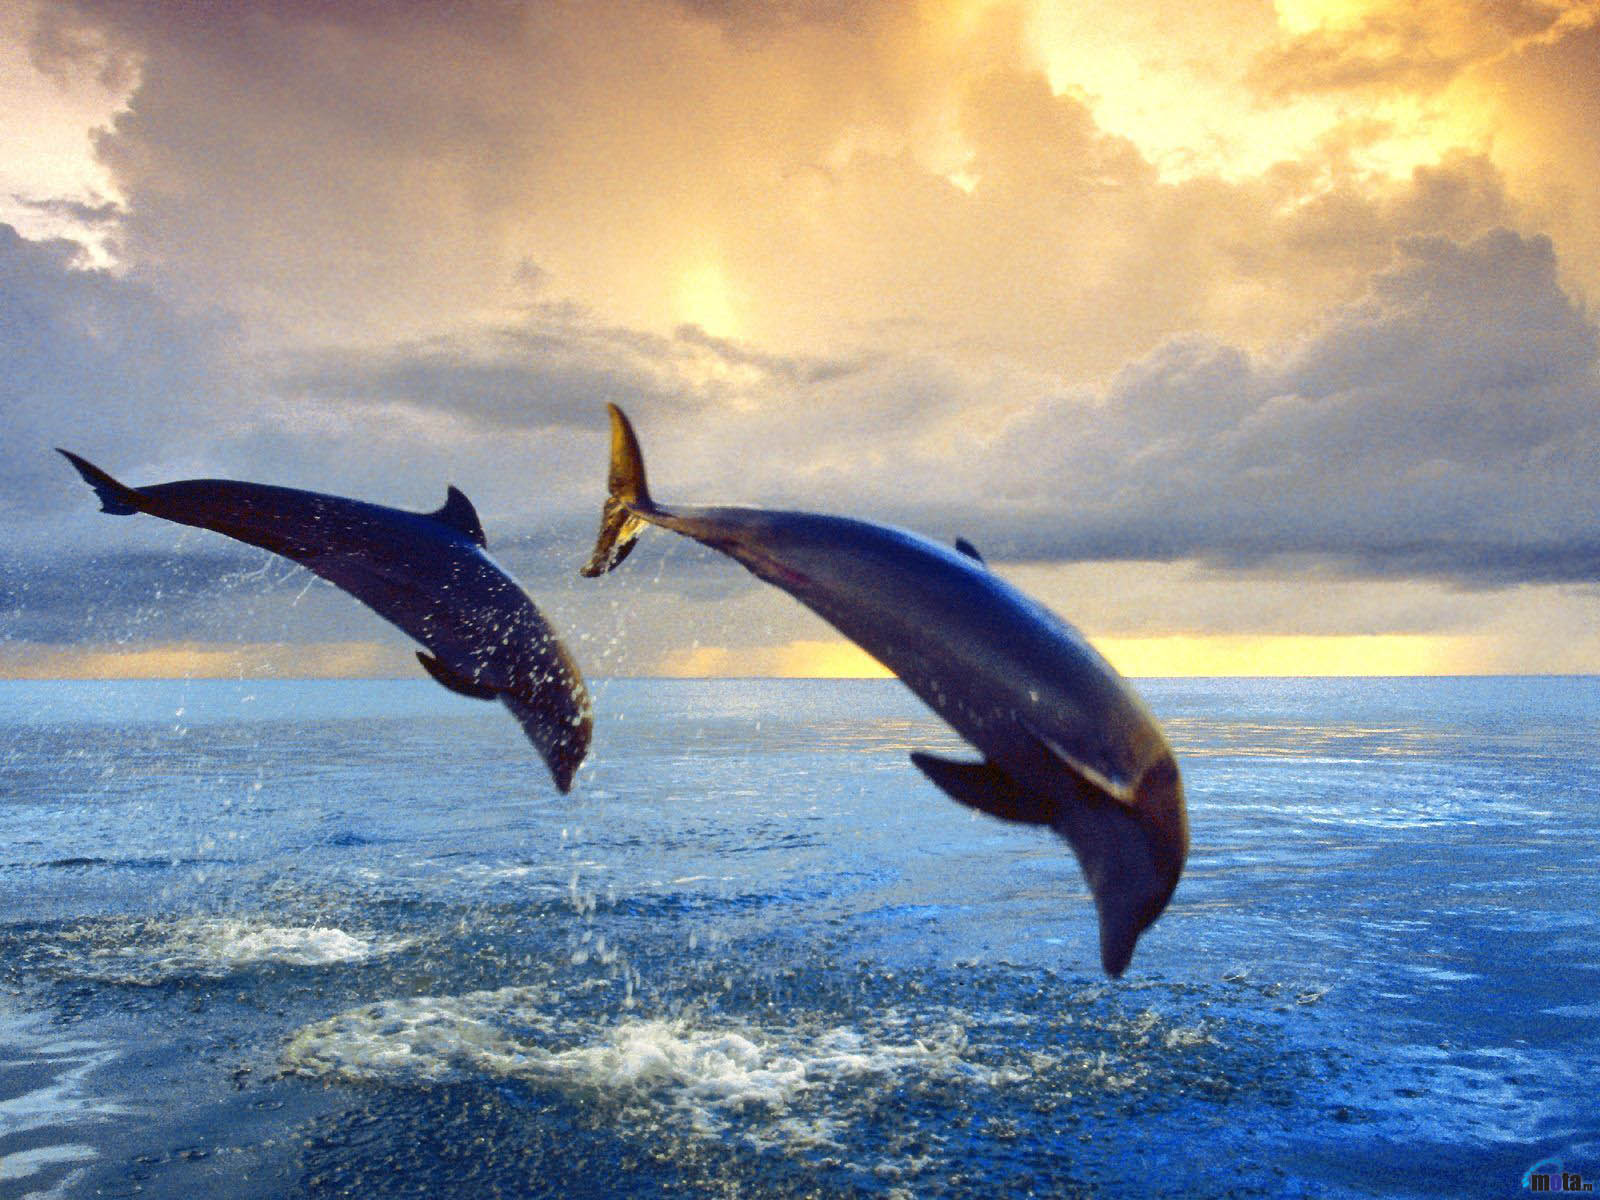 Golfinhos animalia, um animal Animalia